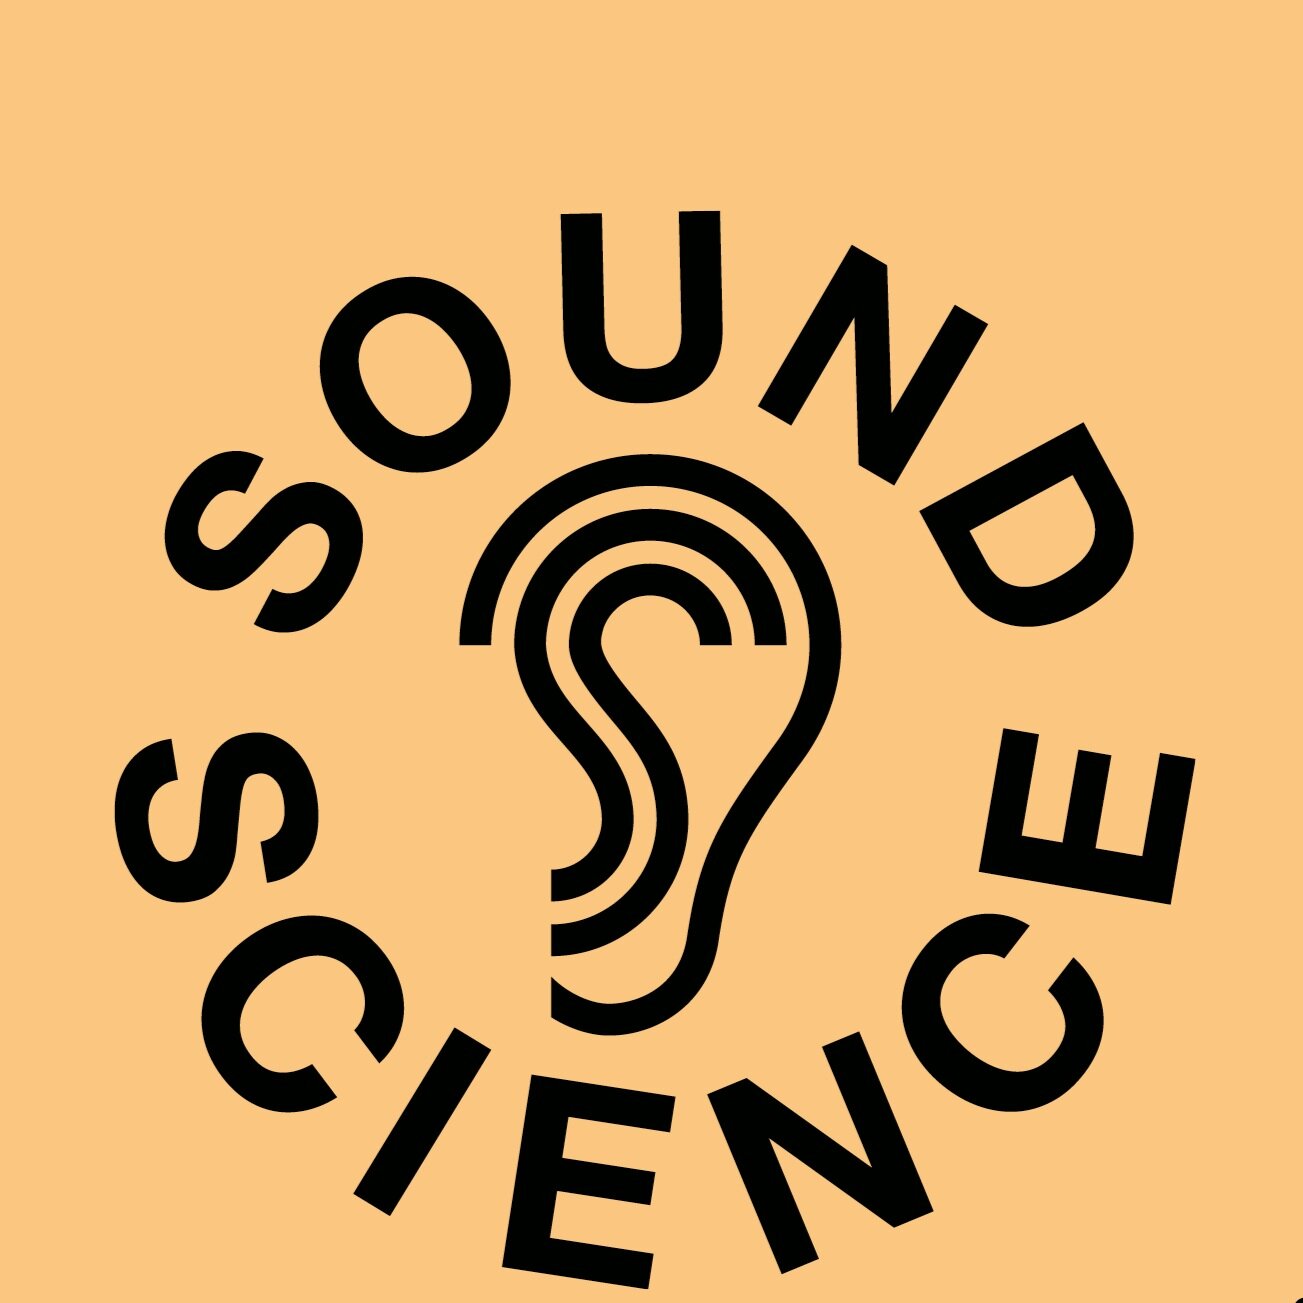 Sound Science